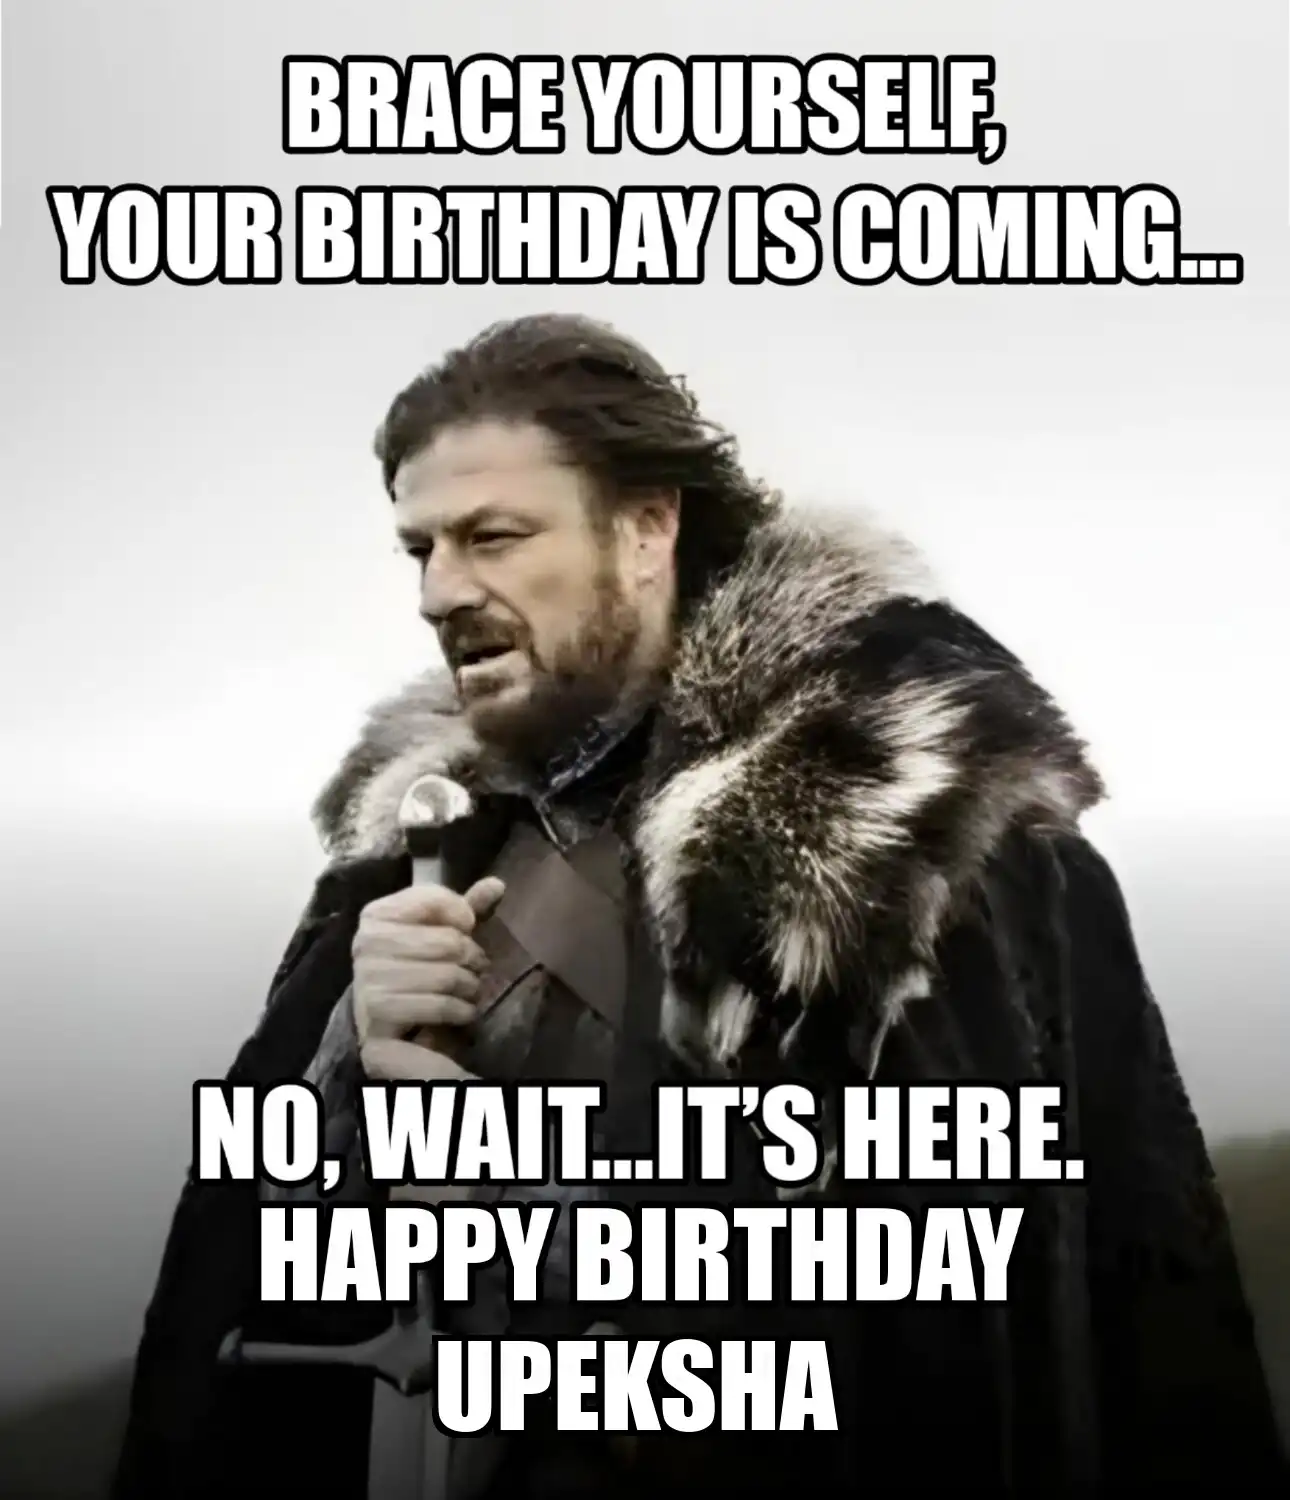 Happy Birthday Upeksha Brace Yourself Your Birthday Is Coming Meme